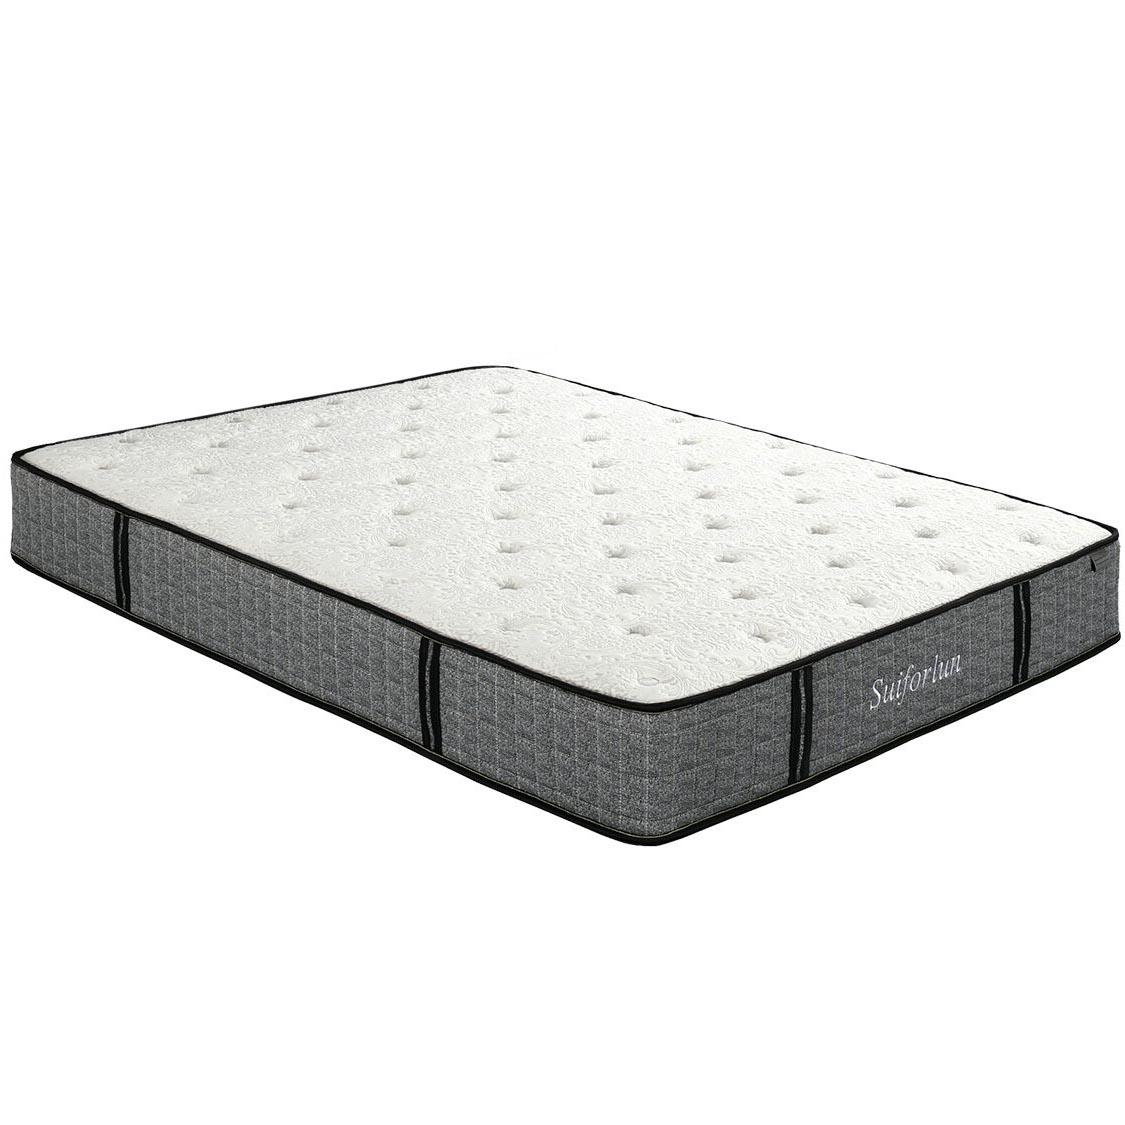 Suiforlun mattress durable hybrid mattress customized for family